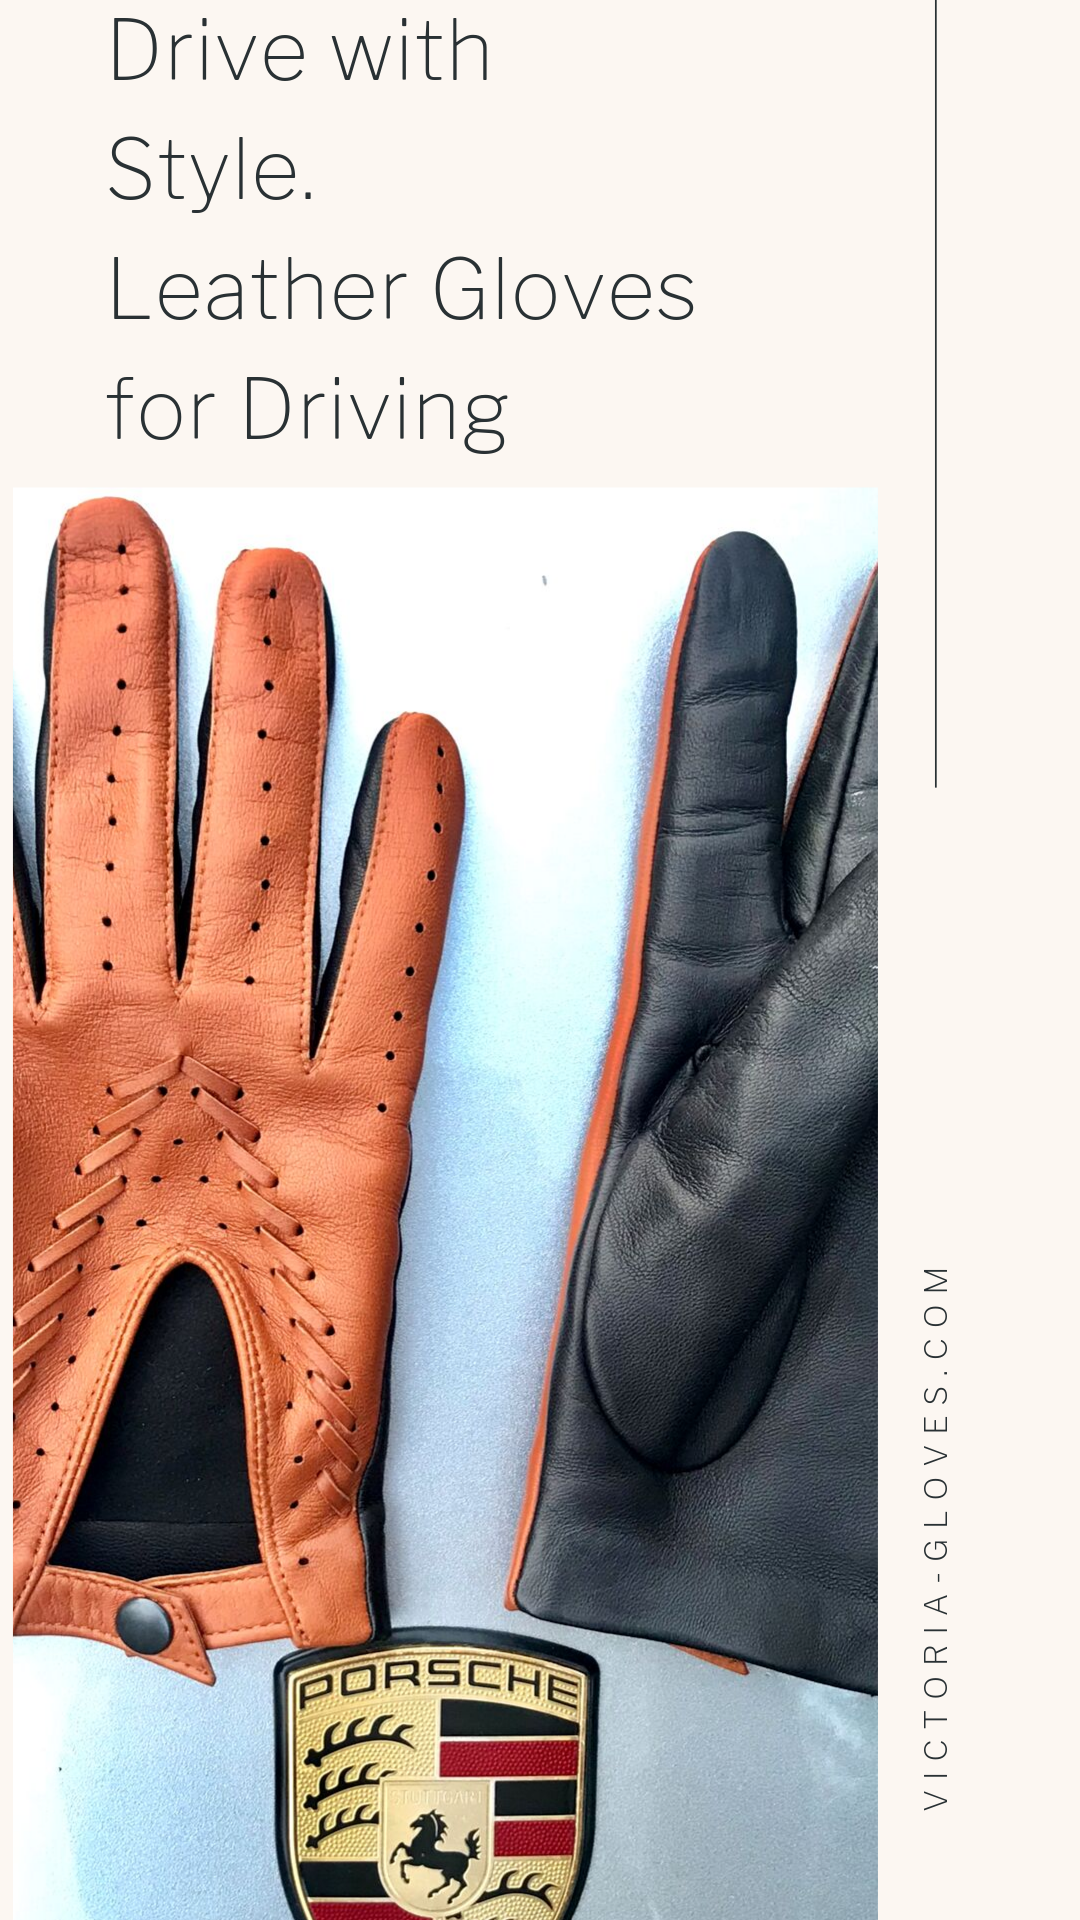 IMG-0721 Blog - Victoria gloves online: shop gloves in leather